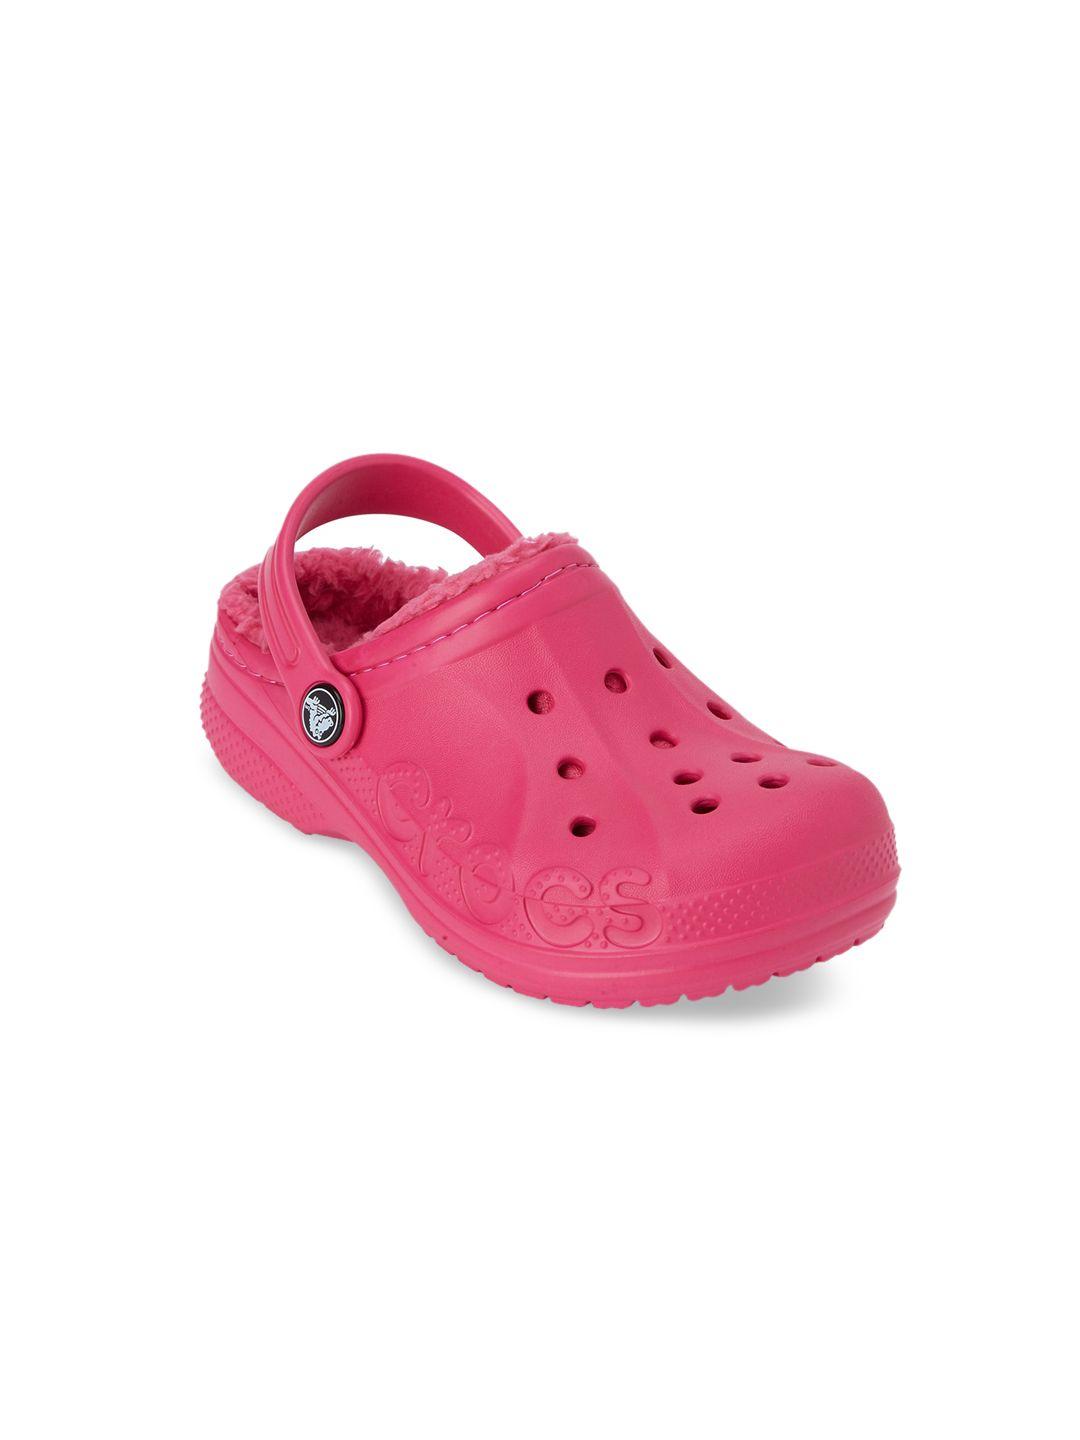 crocs bayaband girls pink clogs